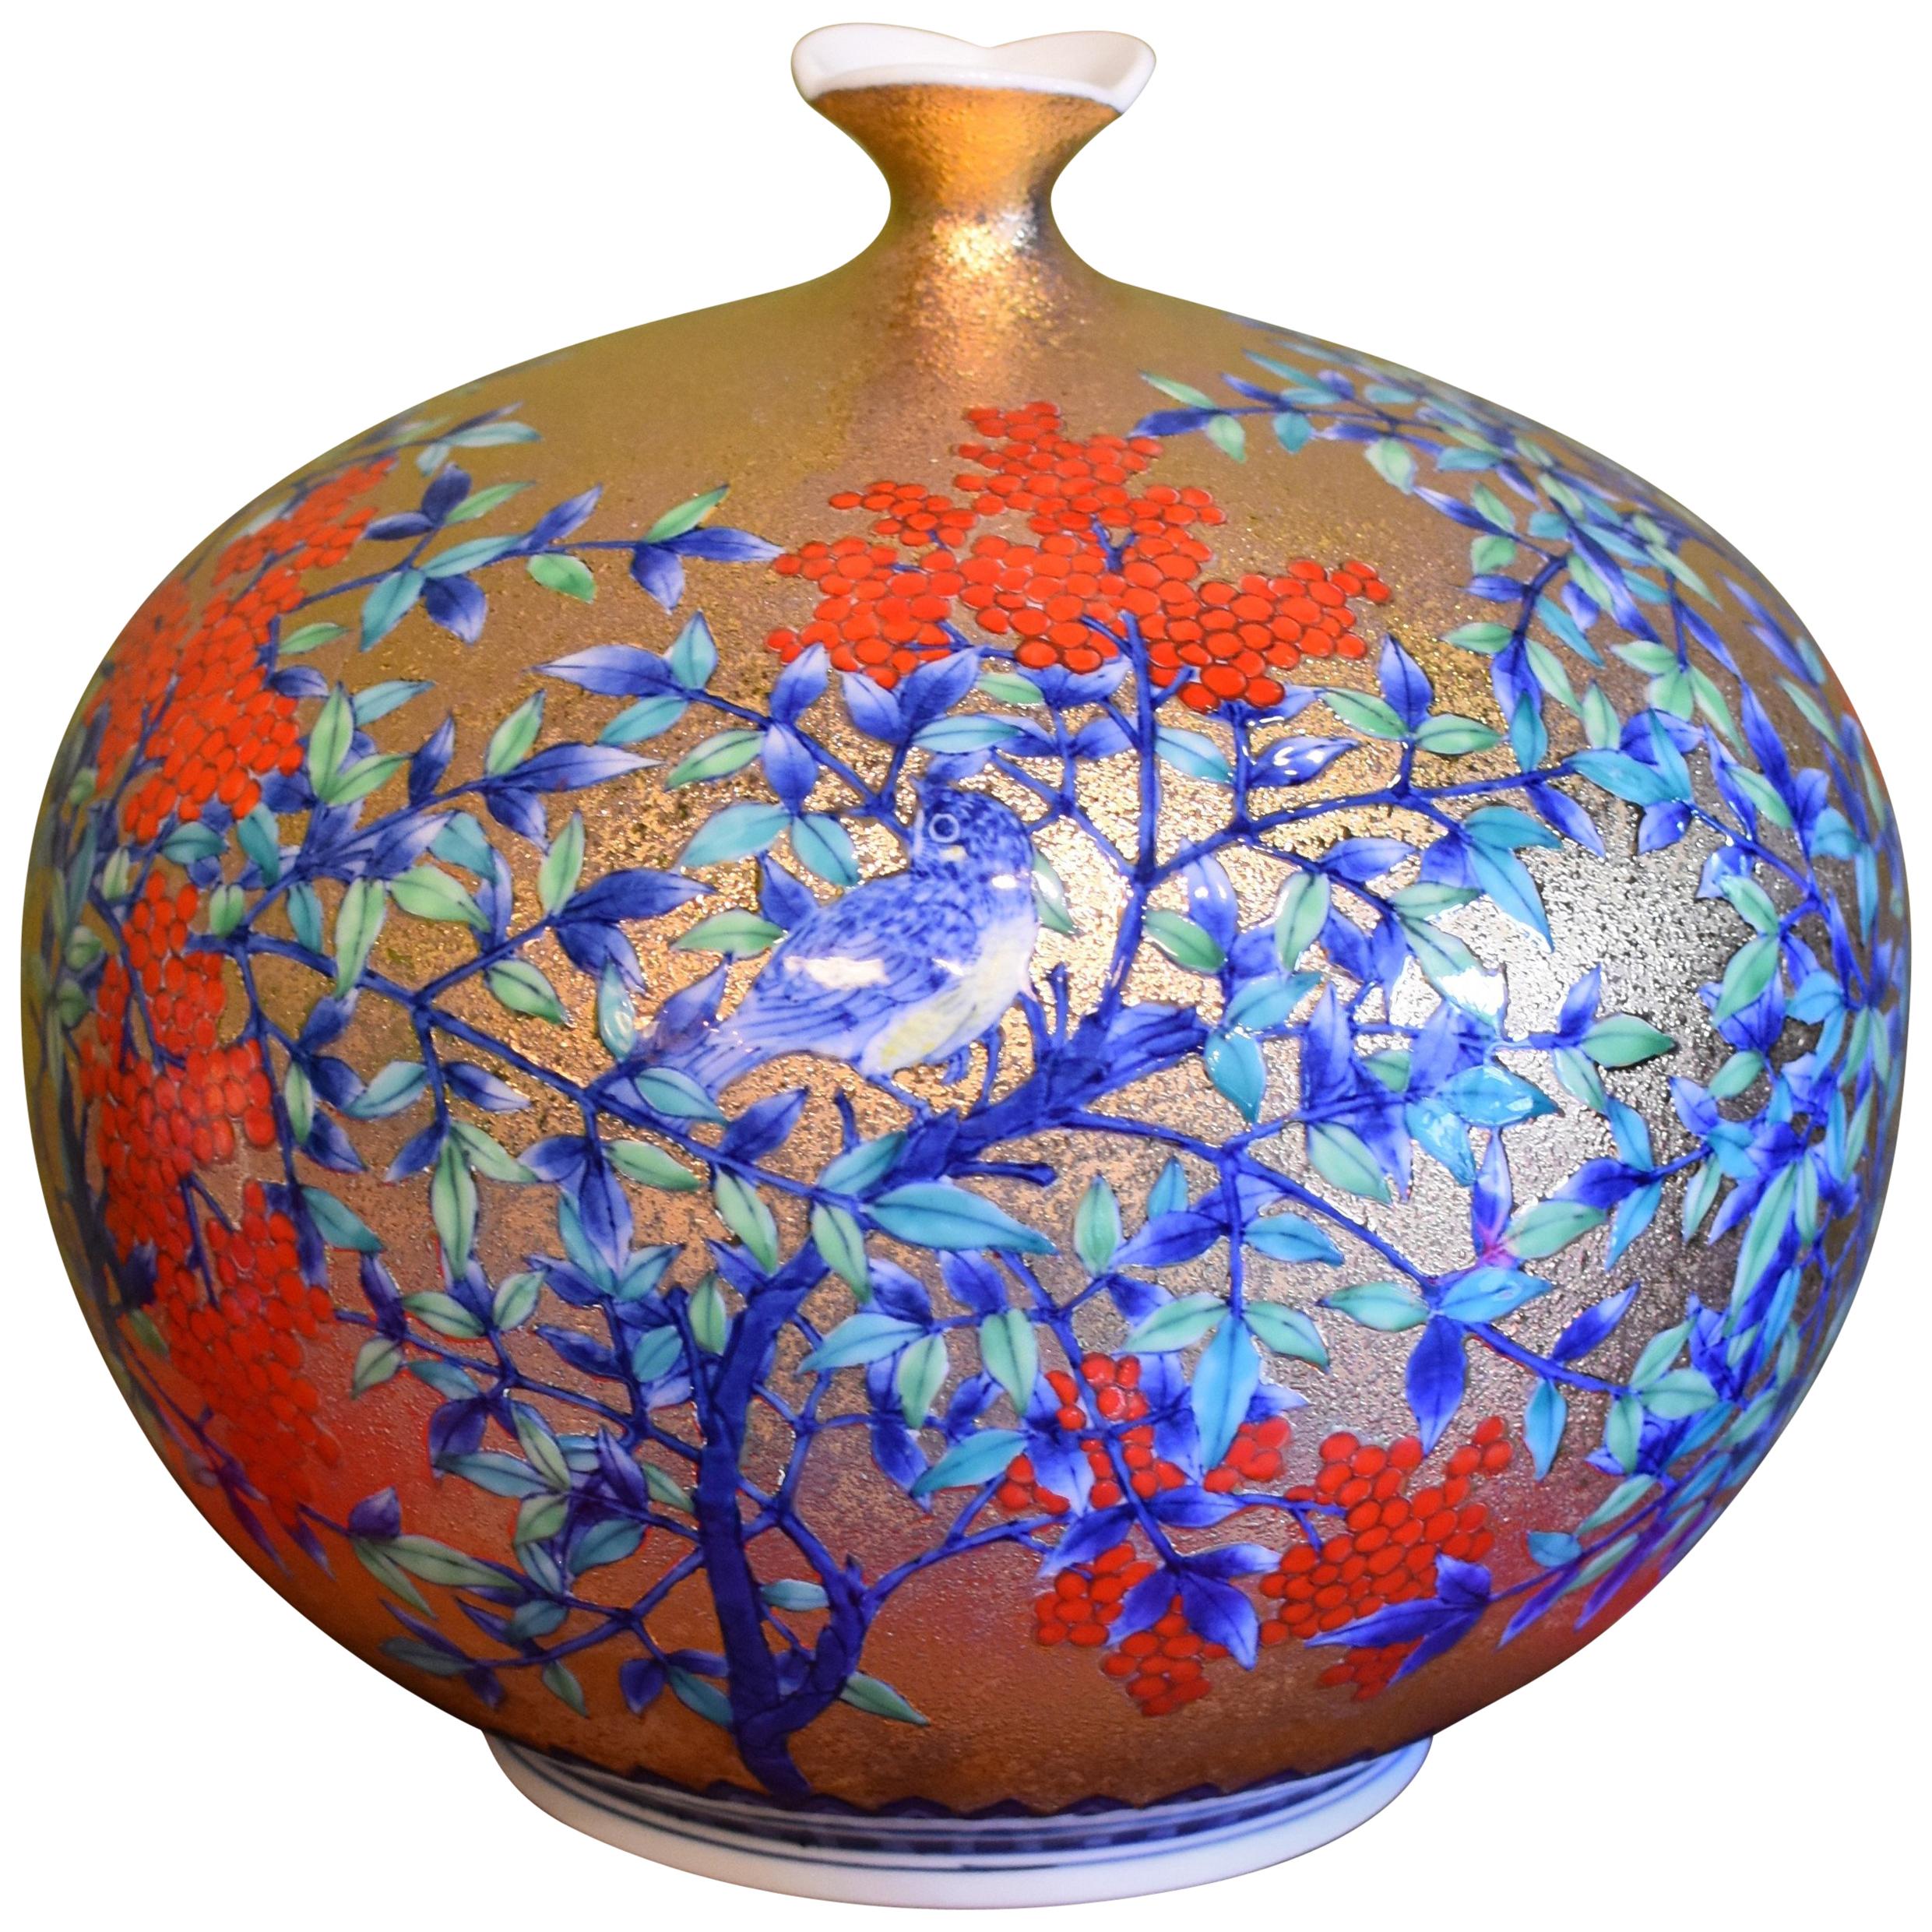 Japanese Contemporary Imari Gilded Porcelain Vase by Master Artist